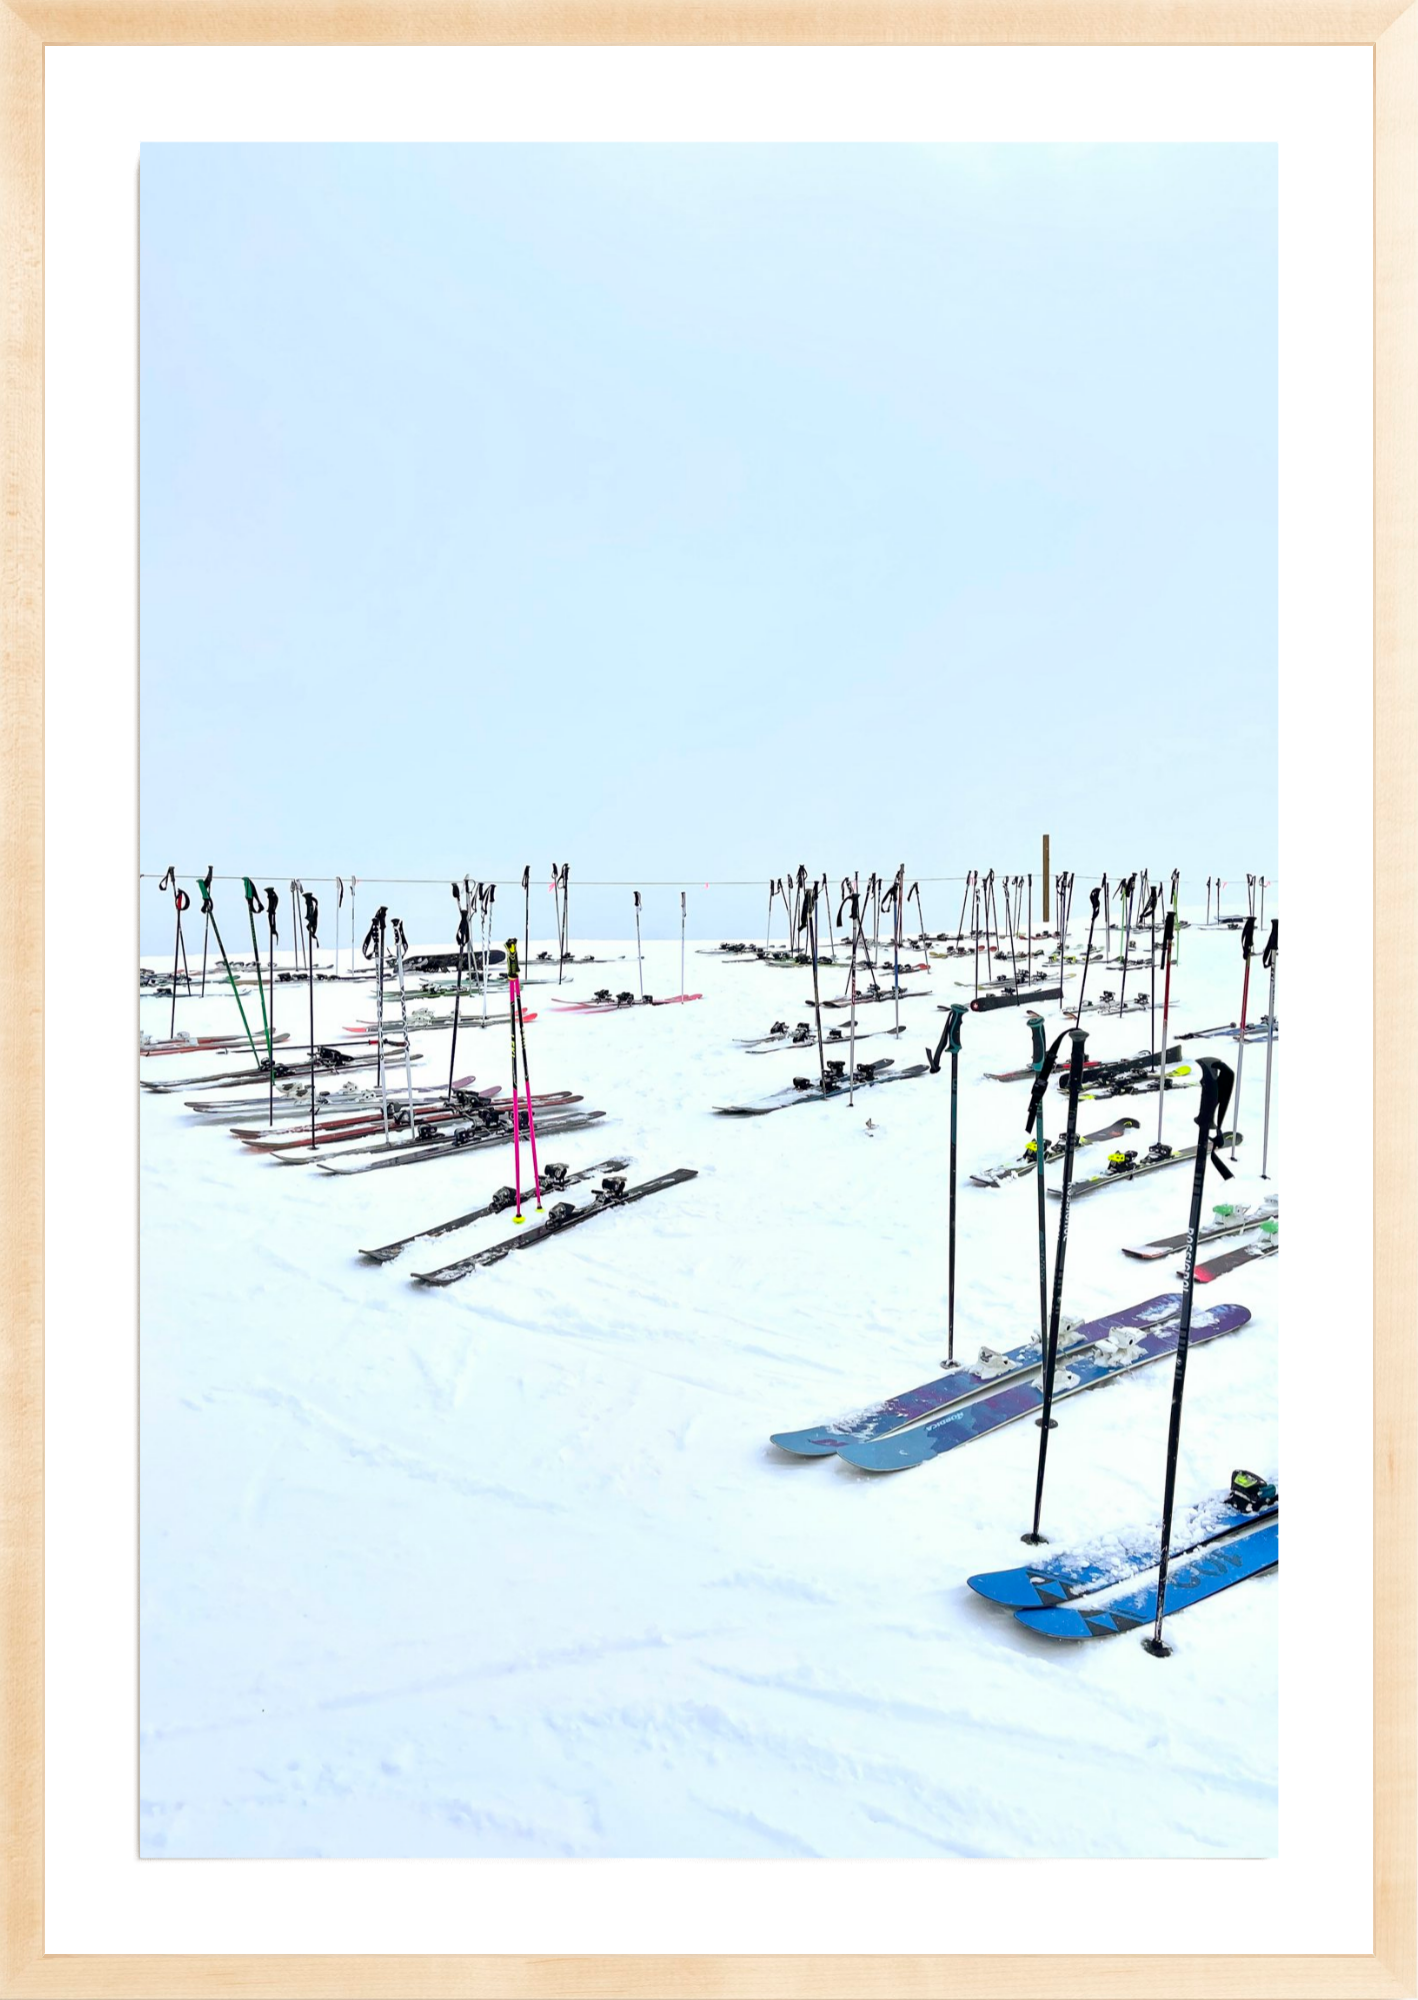 Ski parking lot